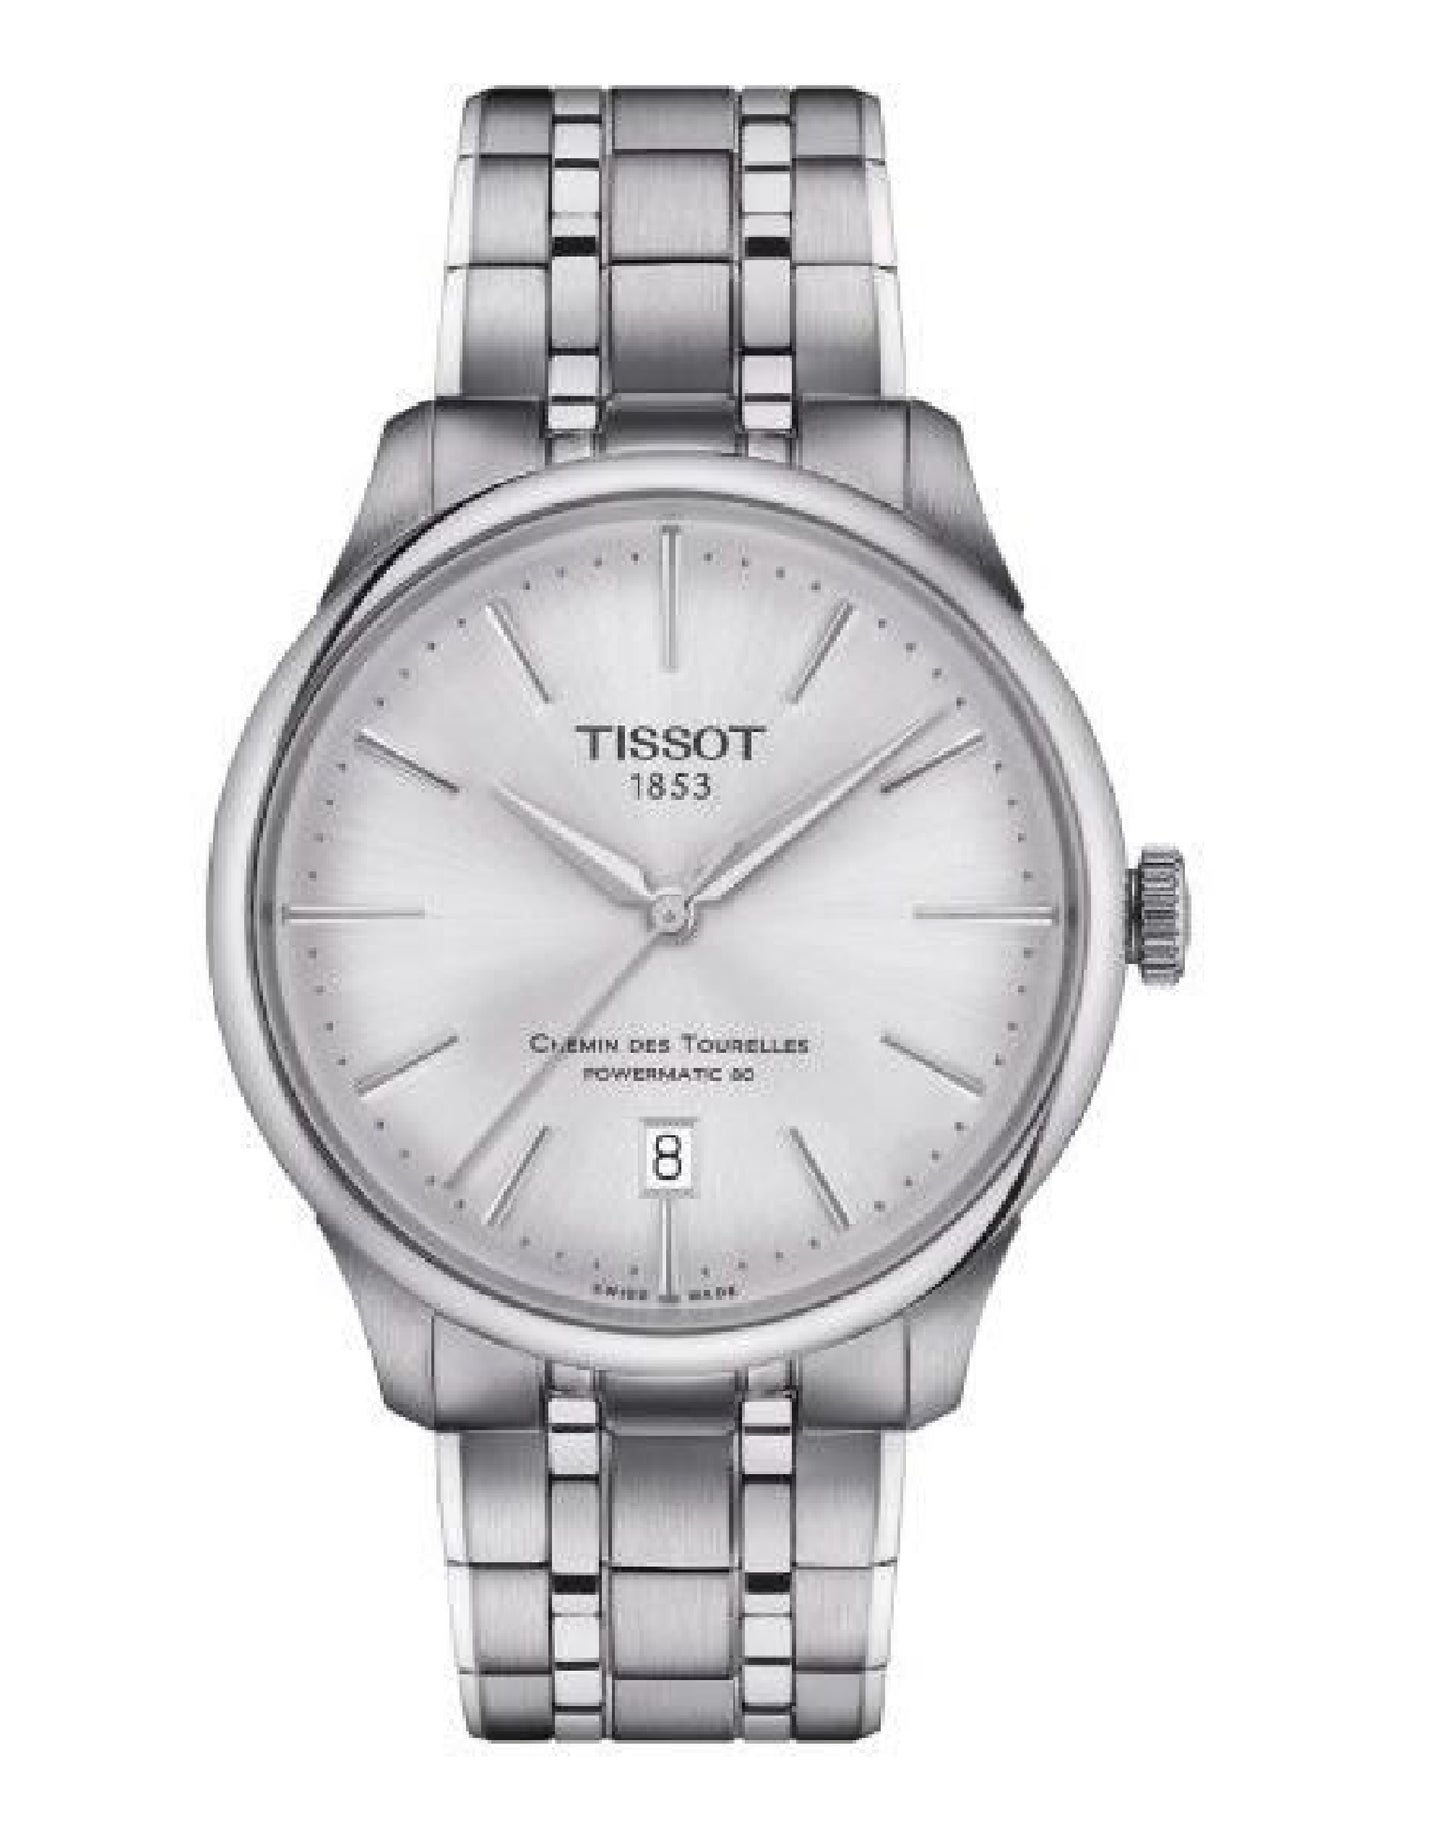 Tissot T139.807.11.031.00 Tissot CHEMIN des TOURELLES Powermatic 80 Silver Watch